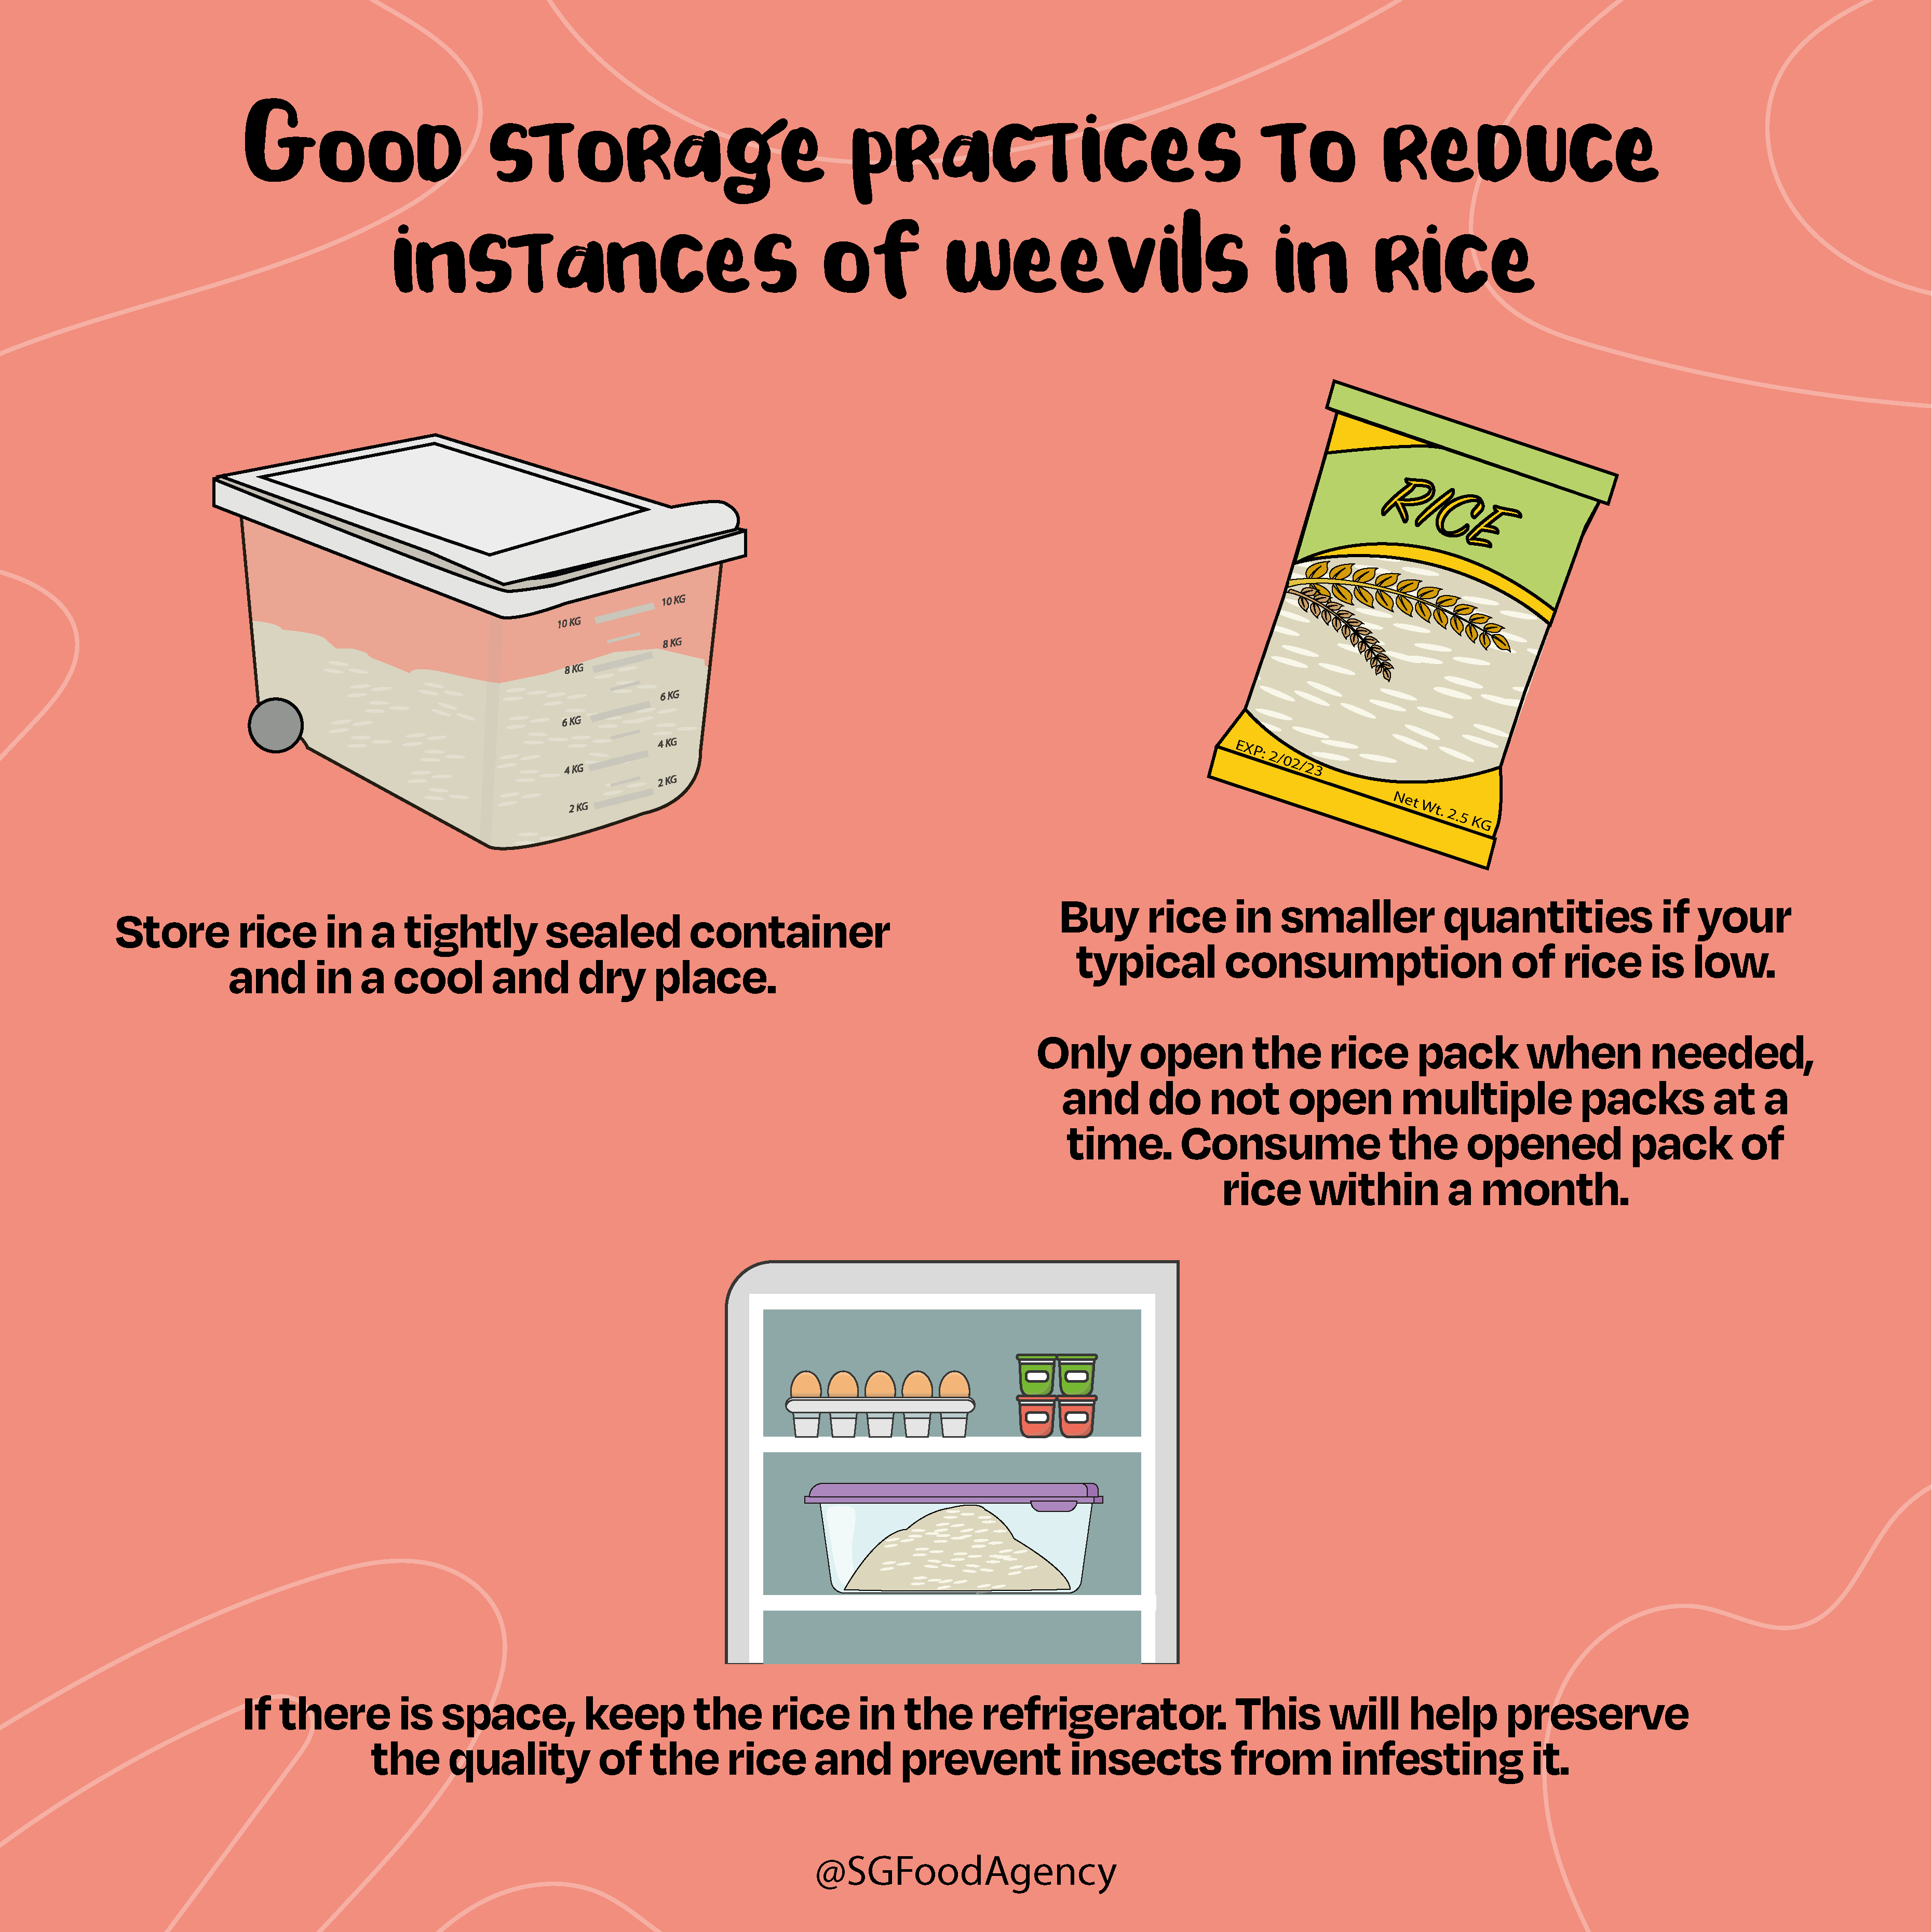 Storage practices to reduce rice weevils